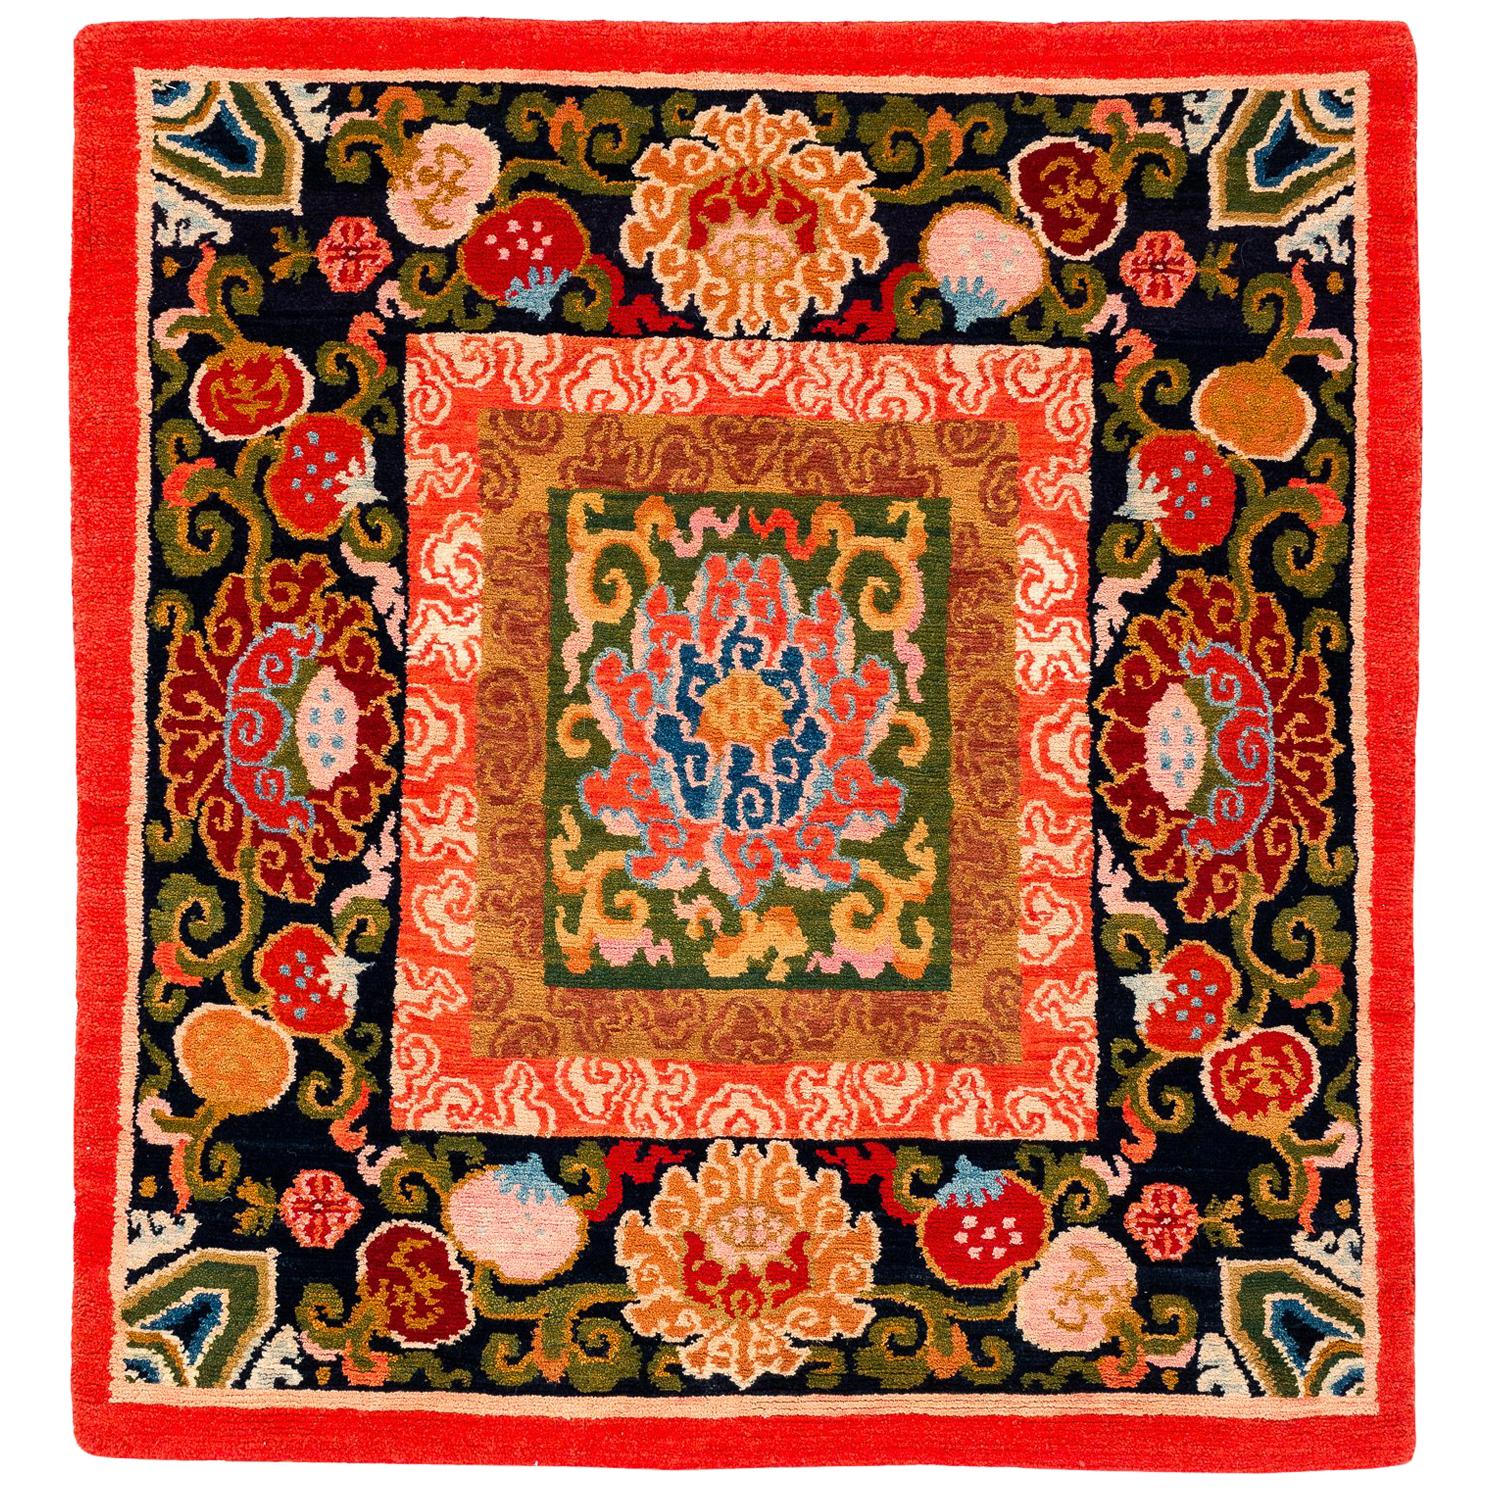 Square Tibetan Area Rug/Meditation Mat